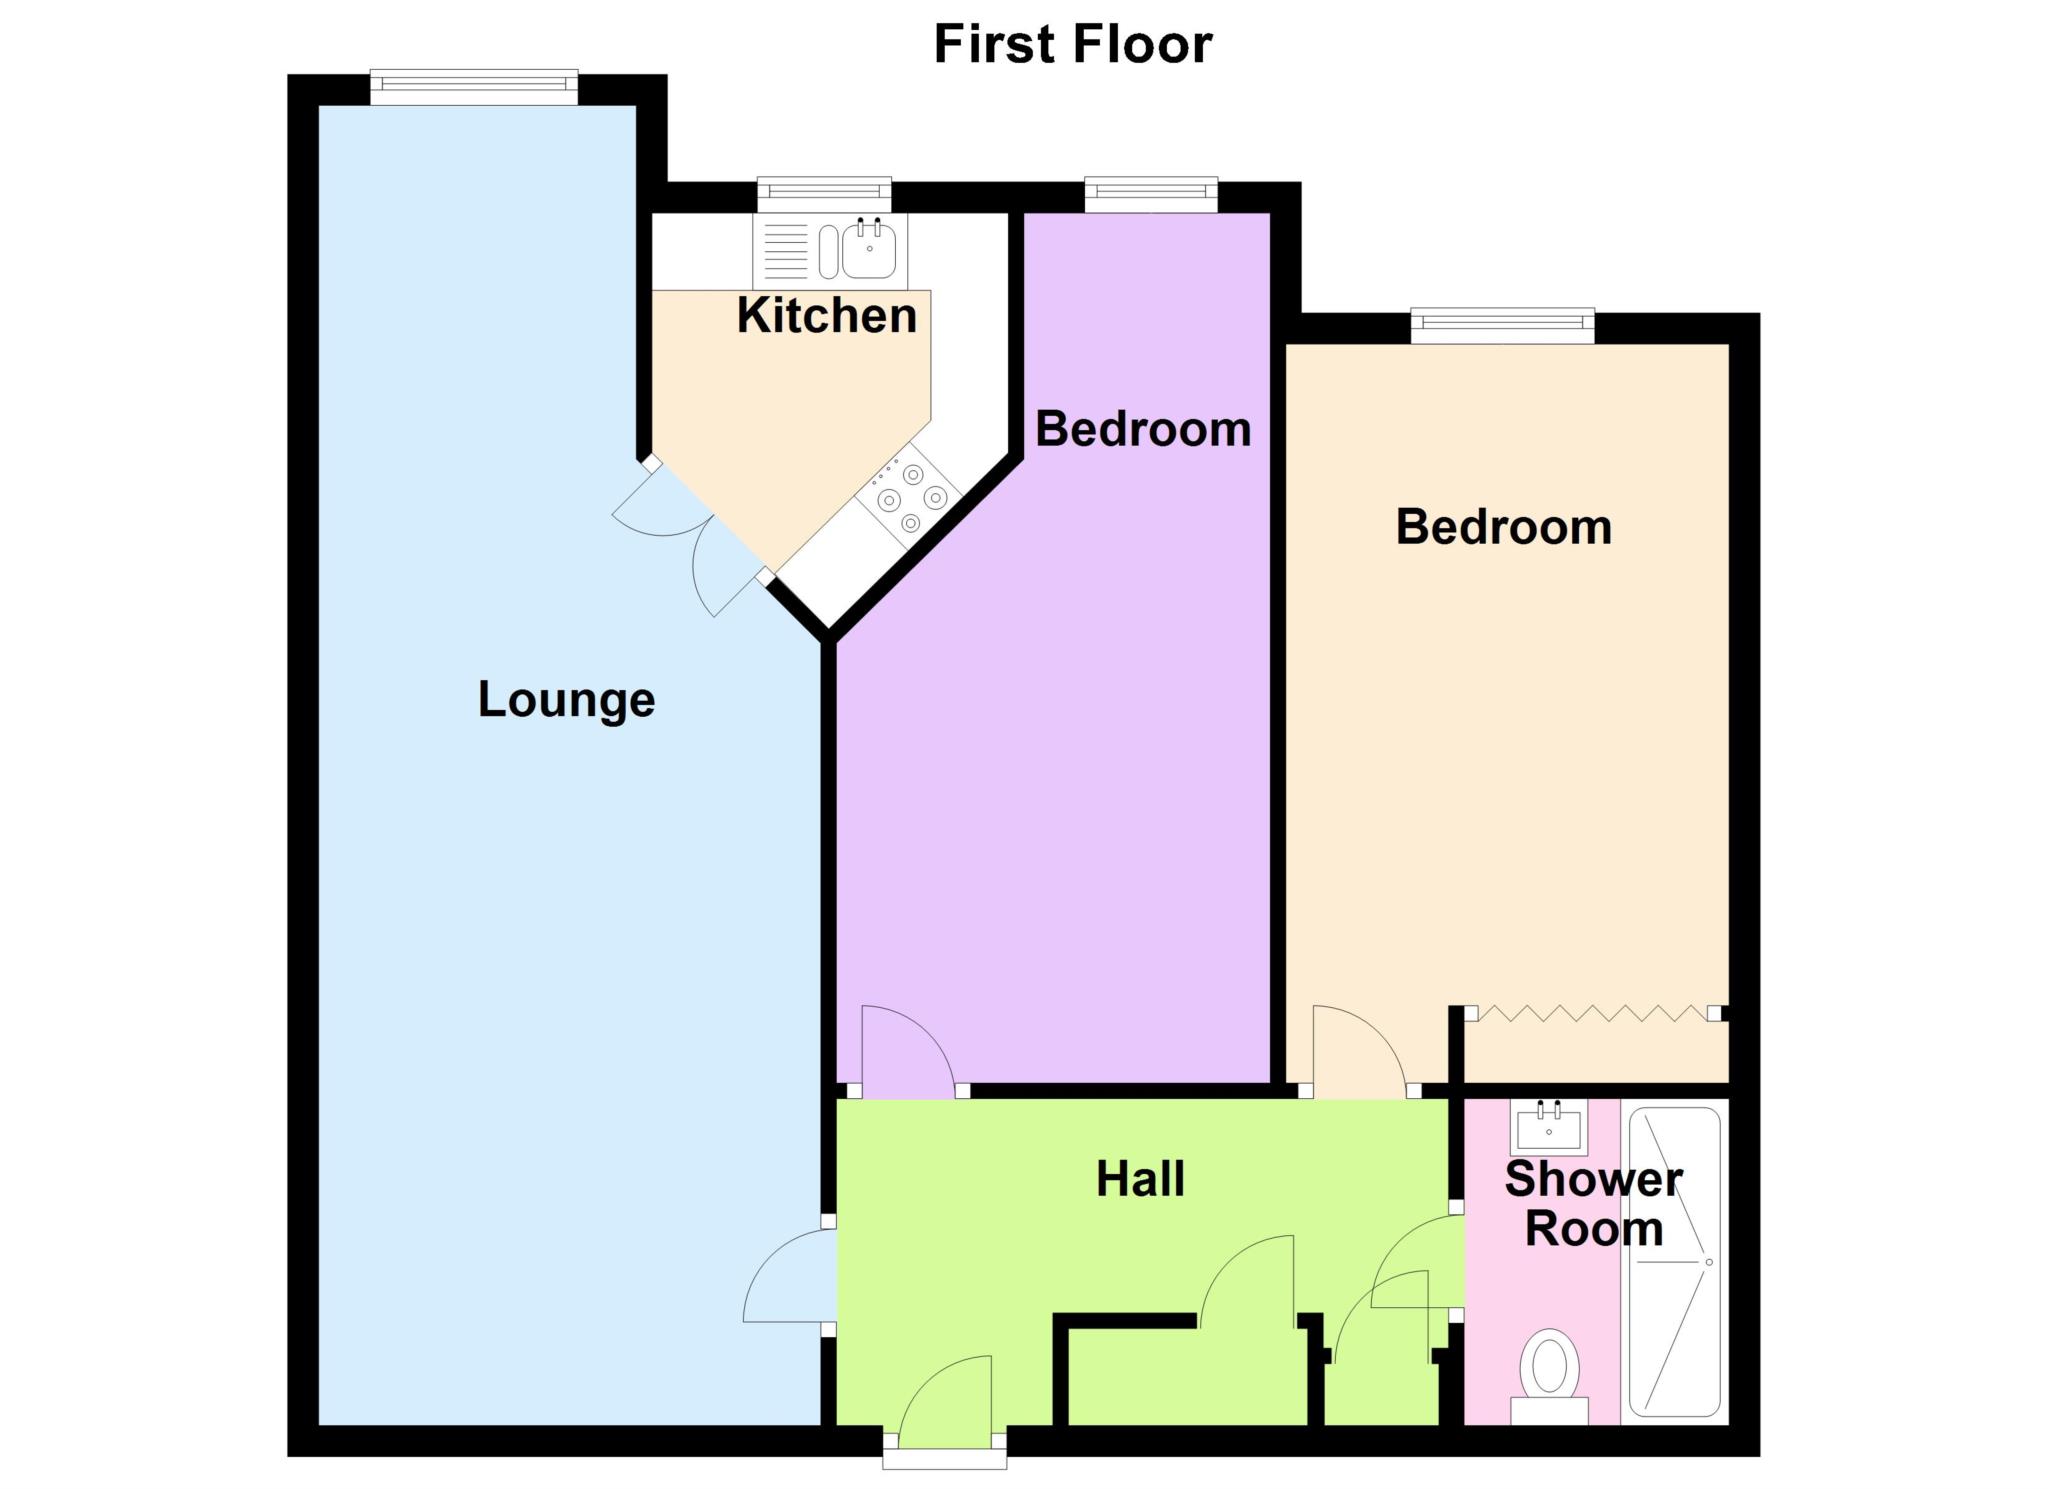 Image of the Floorplan